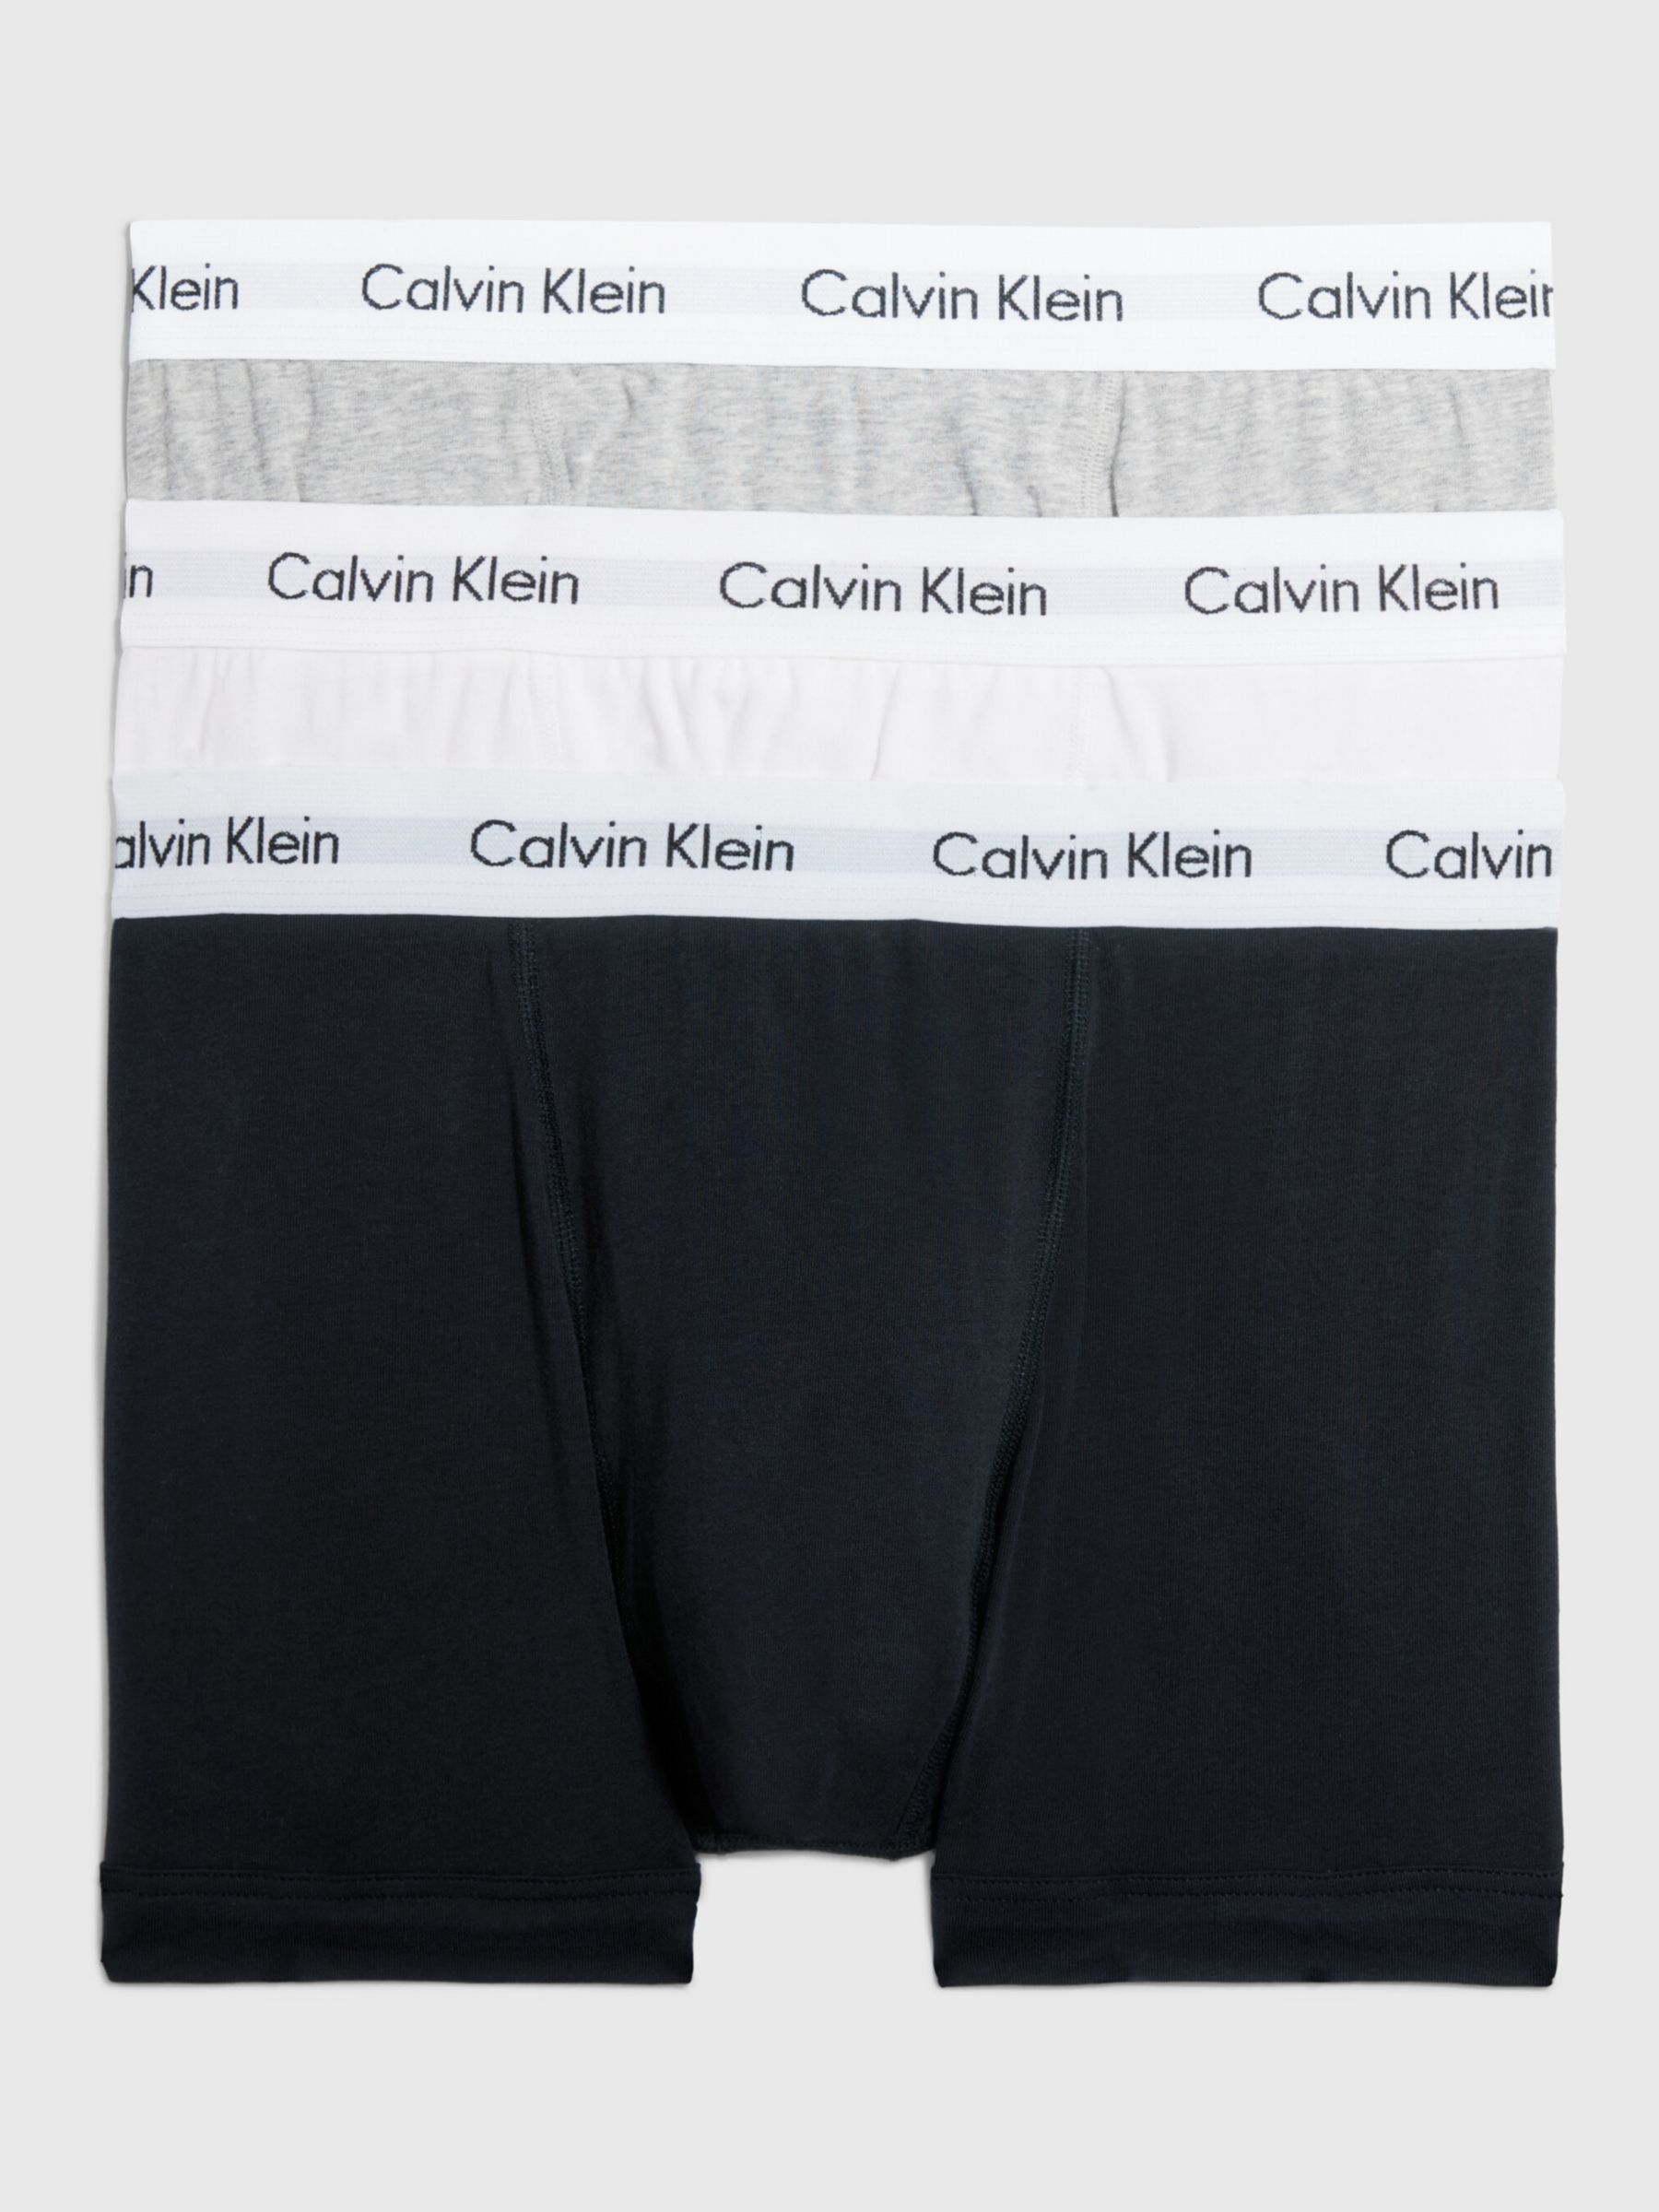 Calvin Klein Regular Cotton Stretch Trunks, Pack of 3, Black/White